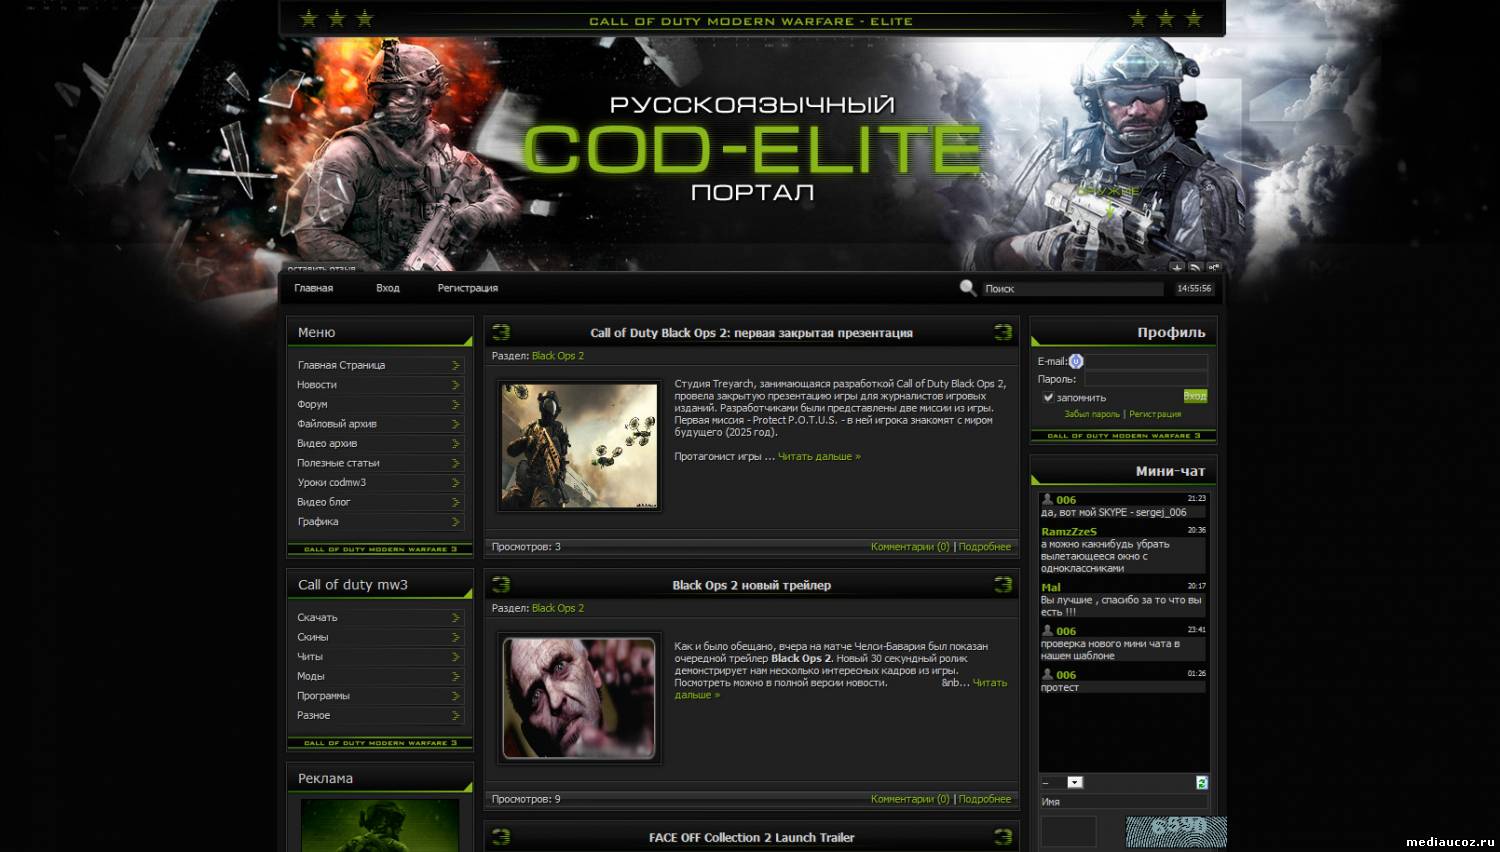 CoD-Elite MW3